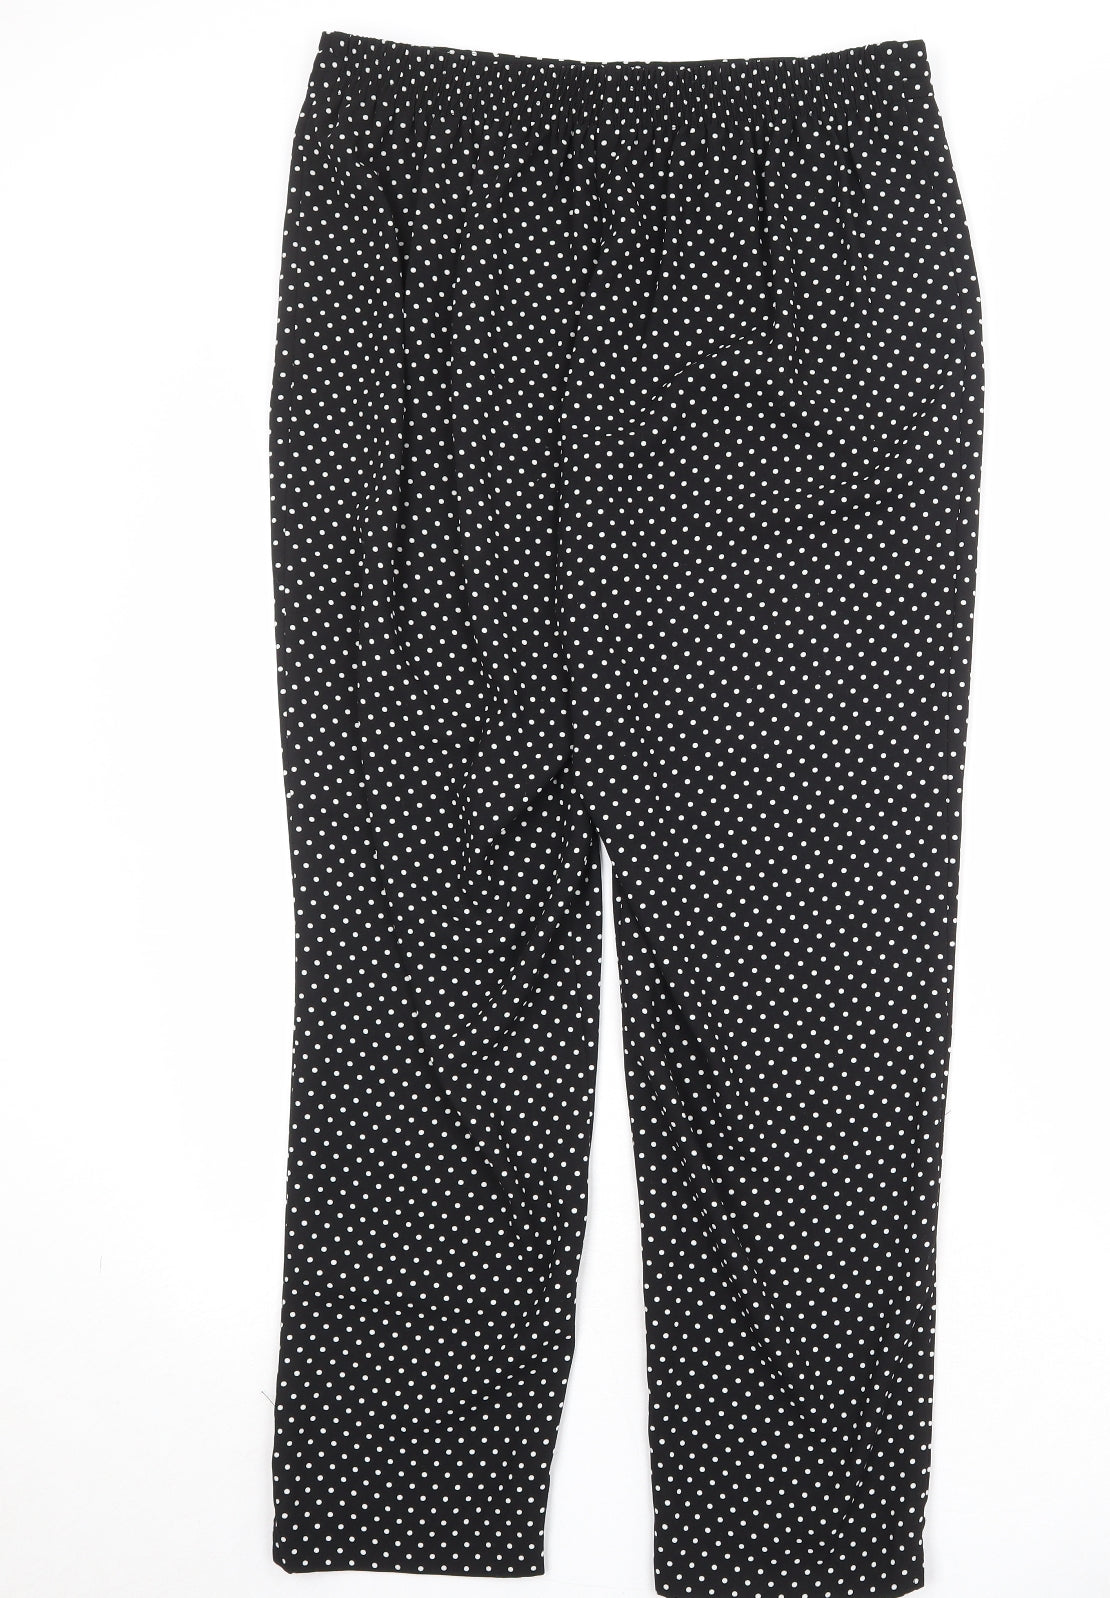 M&Co Womens Black Polka Dot Polyester Carrot Trousers Size 16 Regular Drawstring